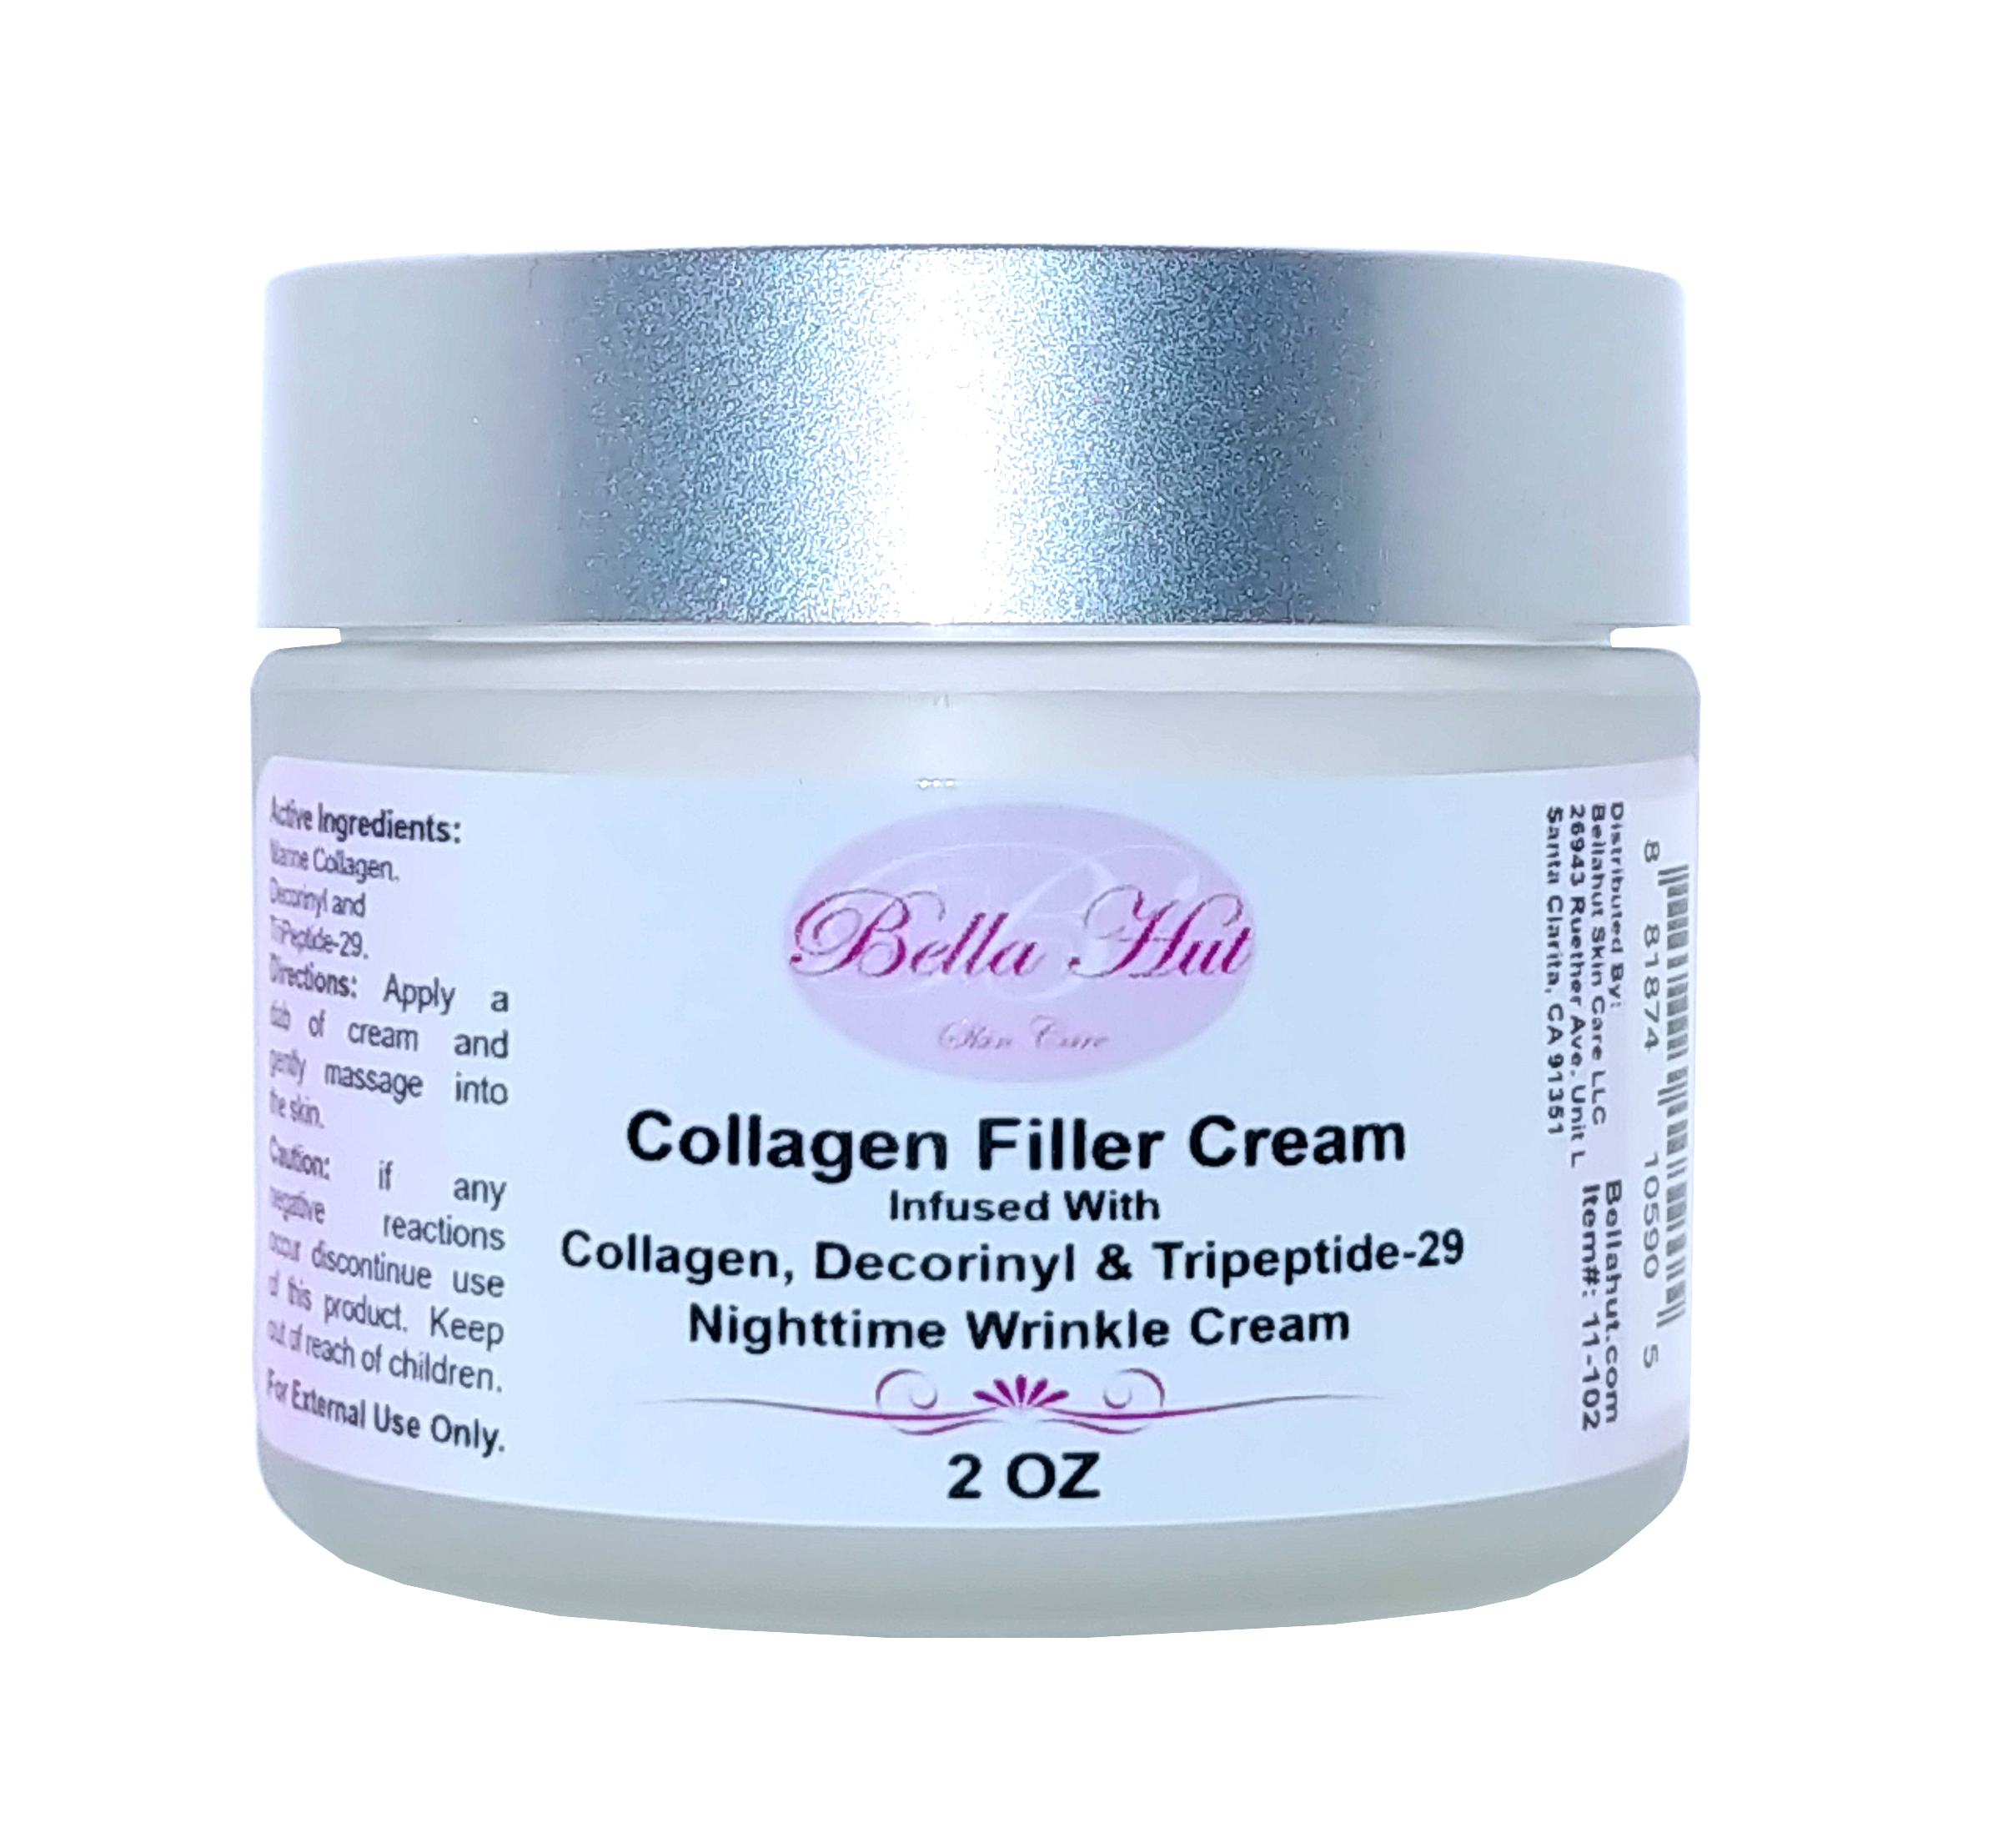 Anti Aging Cream with Marine Collagen, Decorinyl And Tripeptide-29